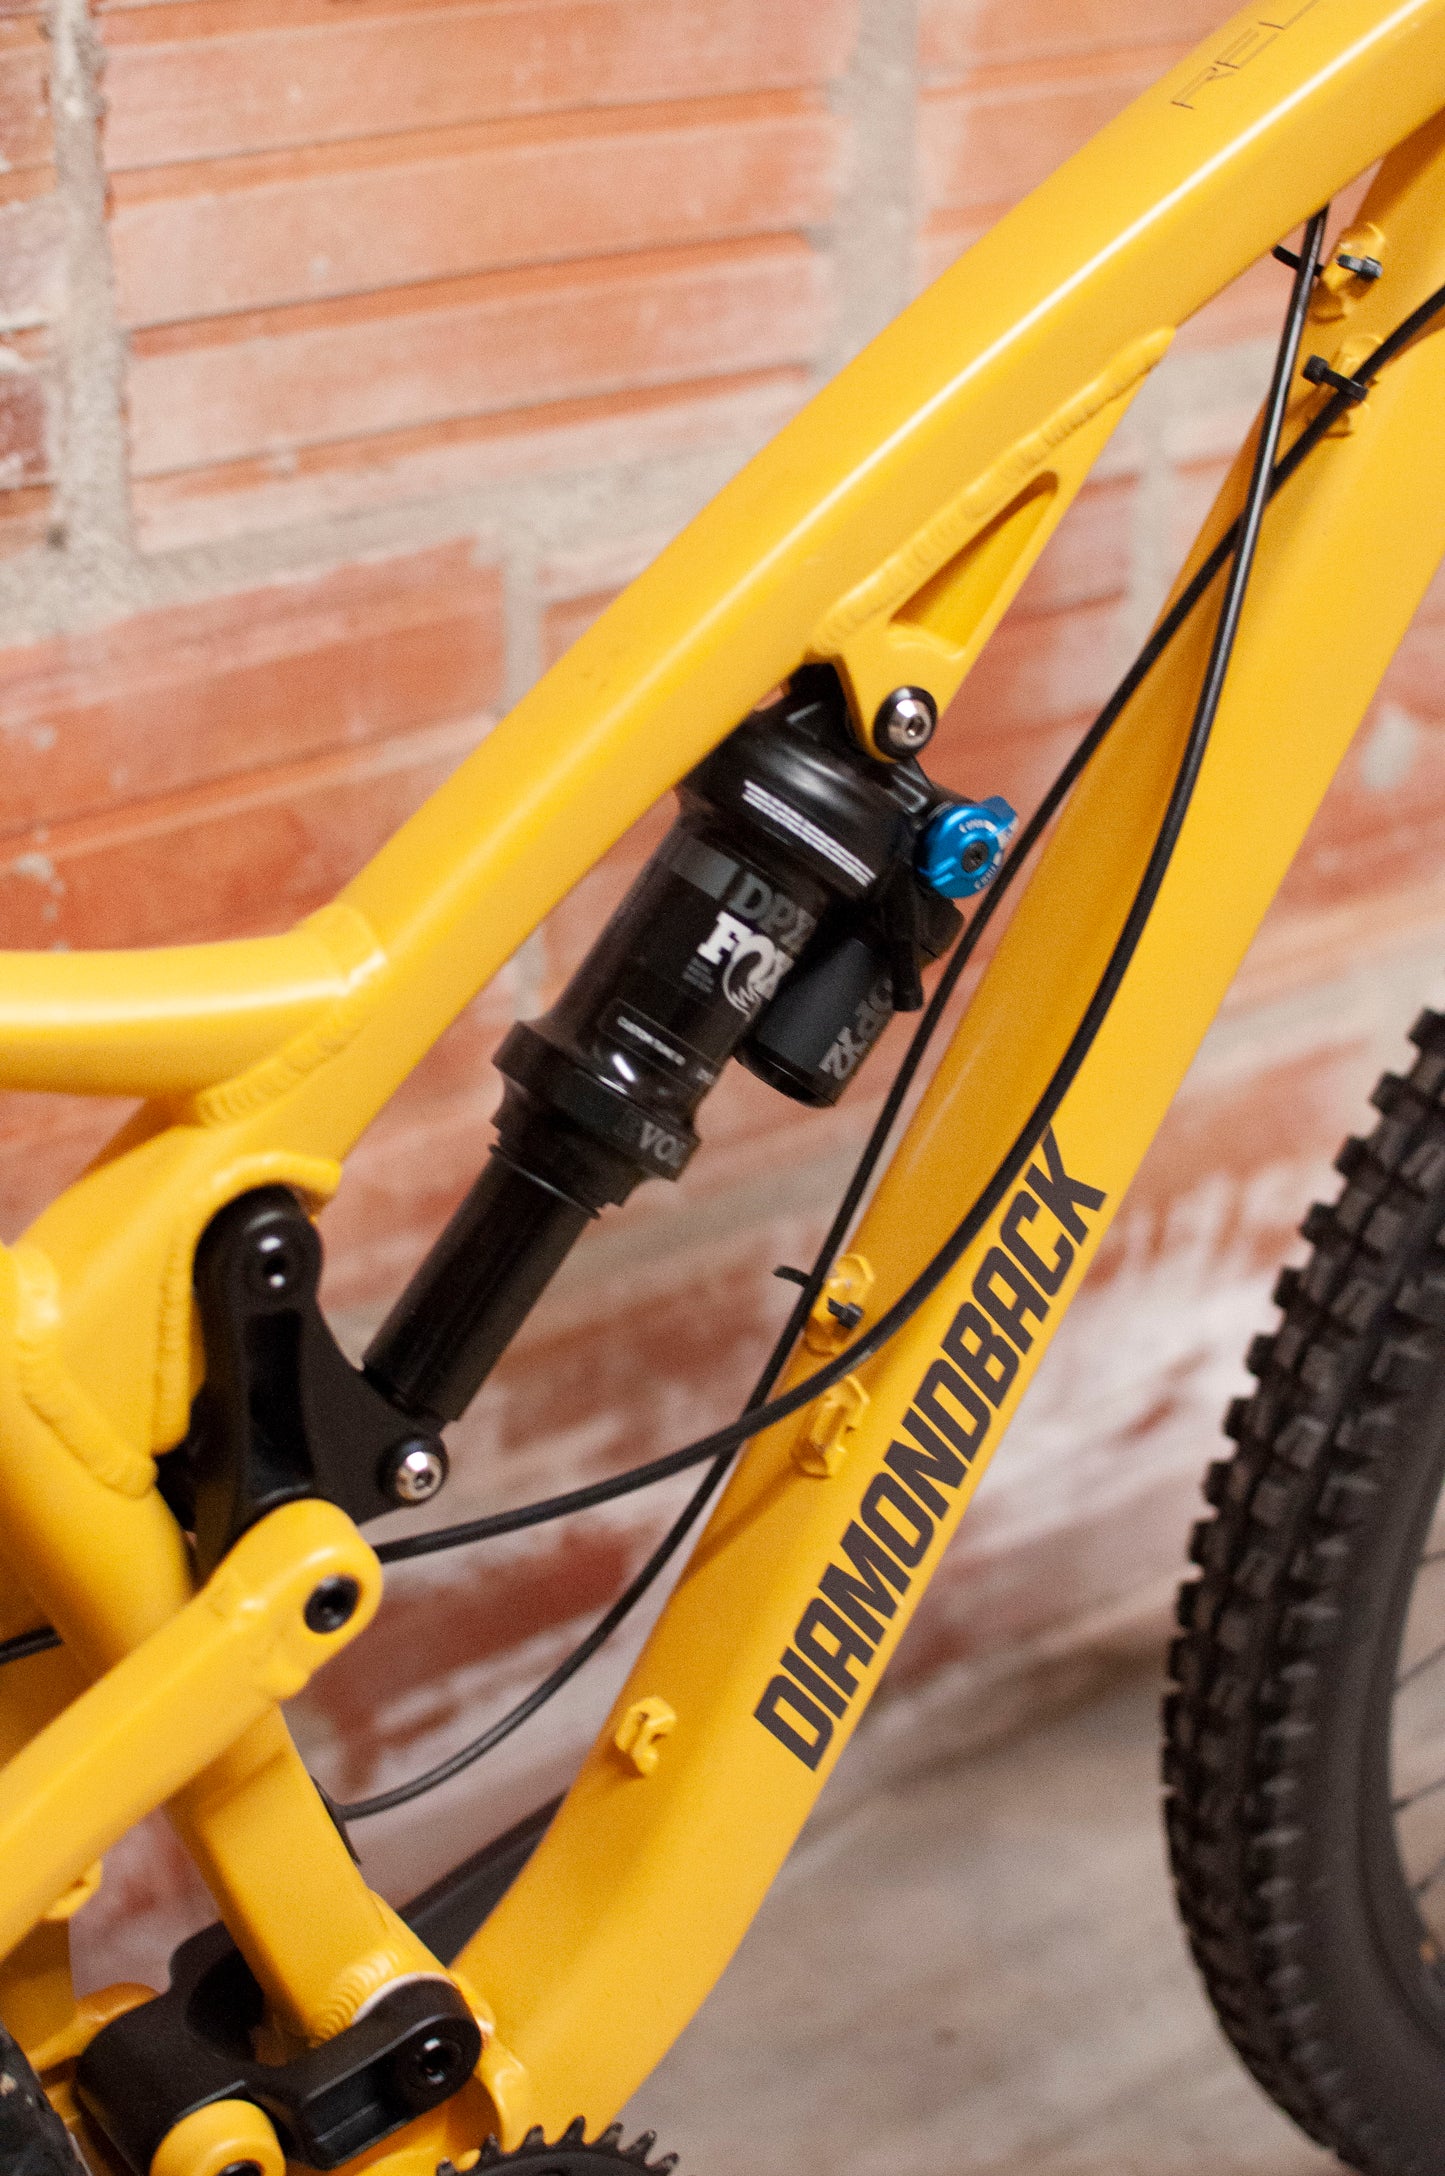 Diamondback Release 3 Full Suspension Mountain Bike, MD, Mustard